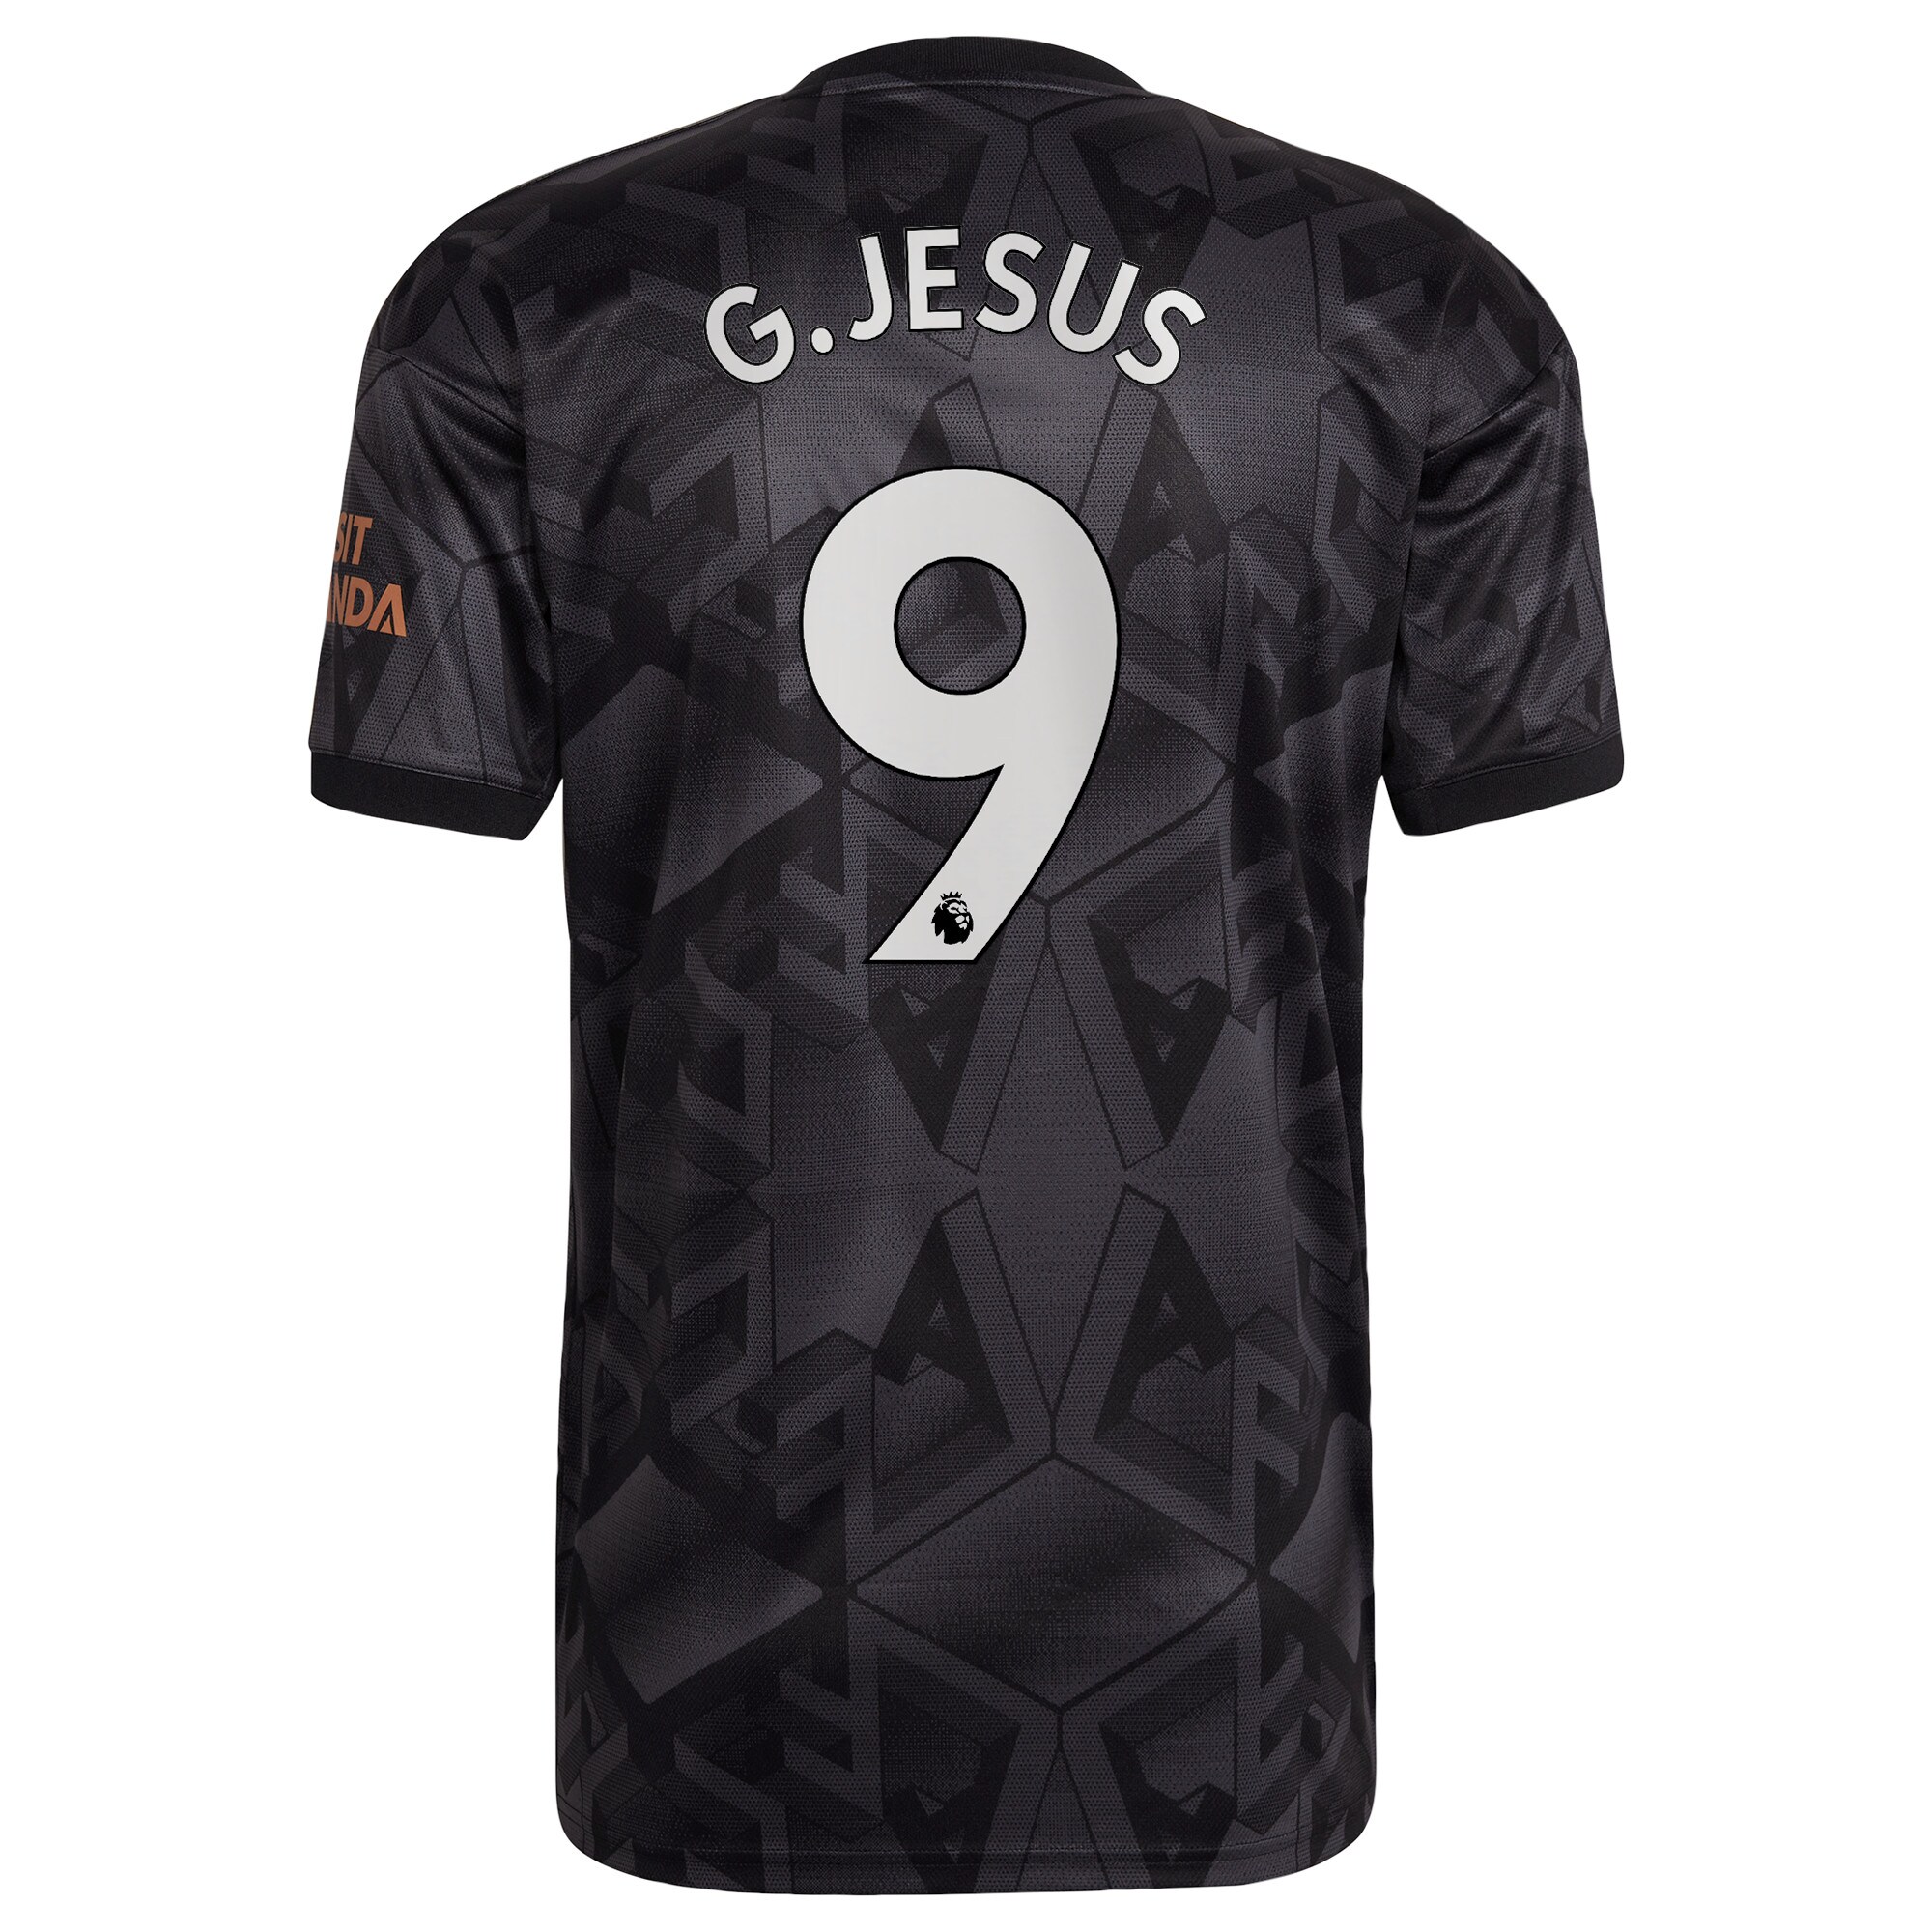 Arsenal Away Shirt 2022-2023 with G.Jesus 9 printing